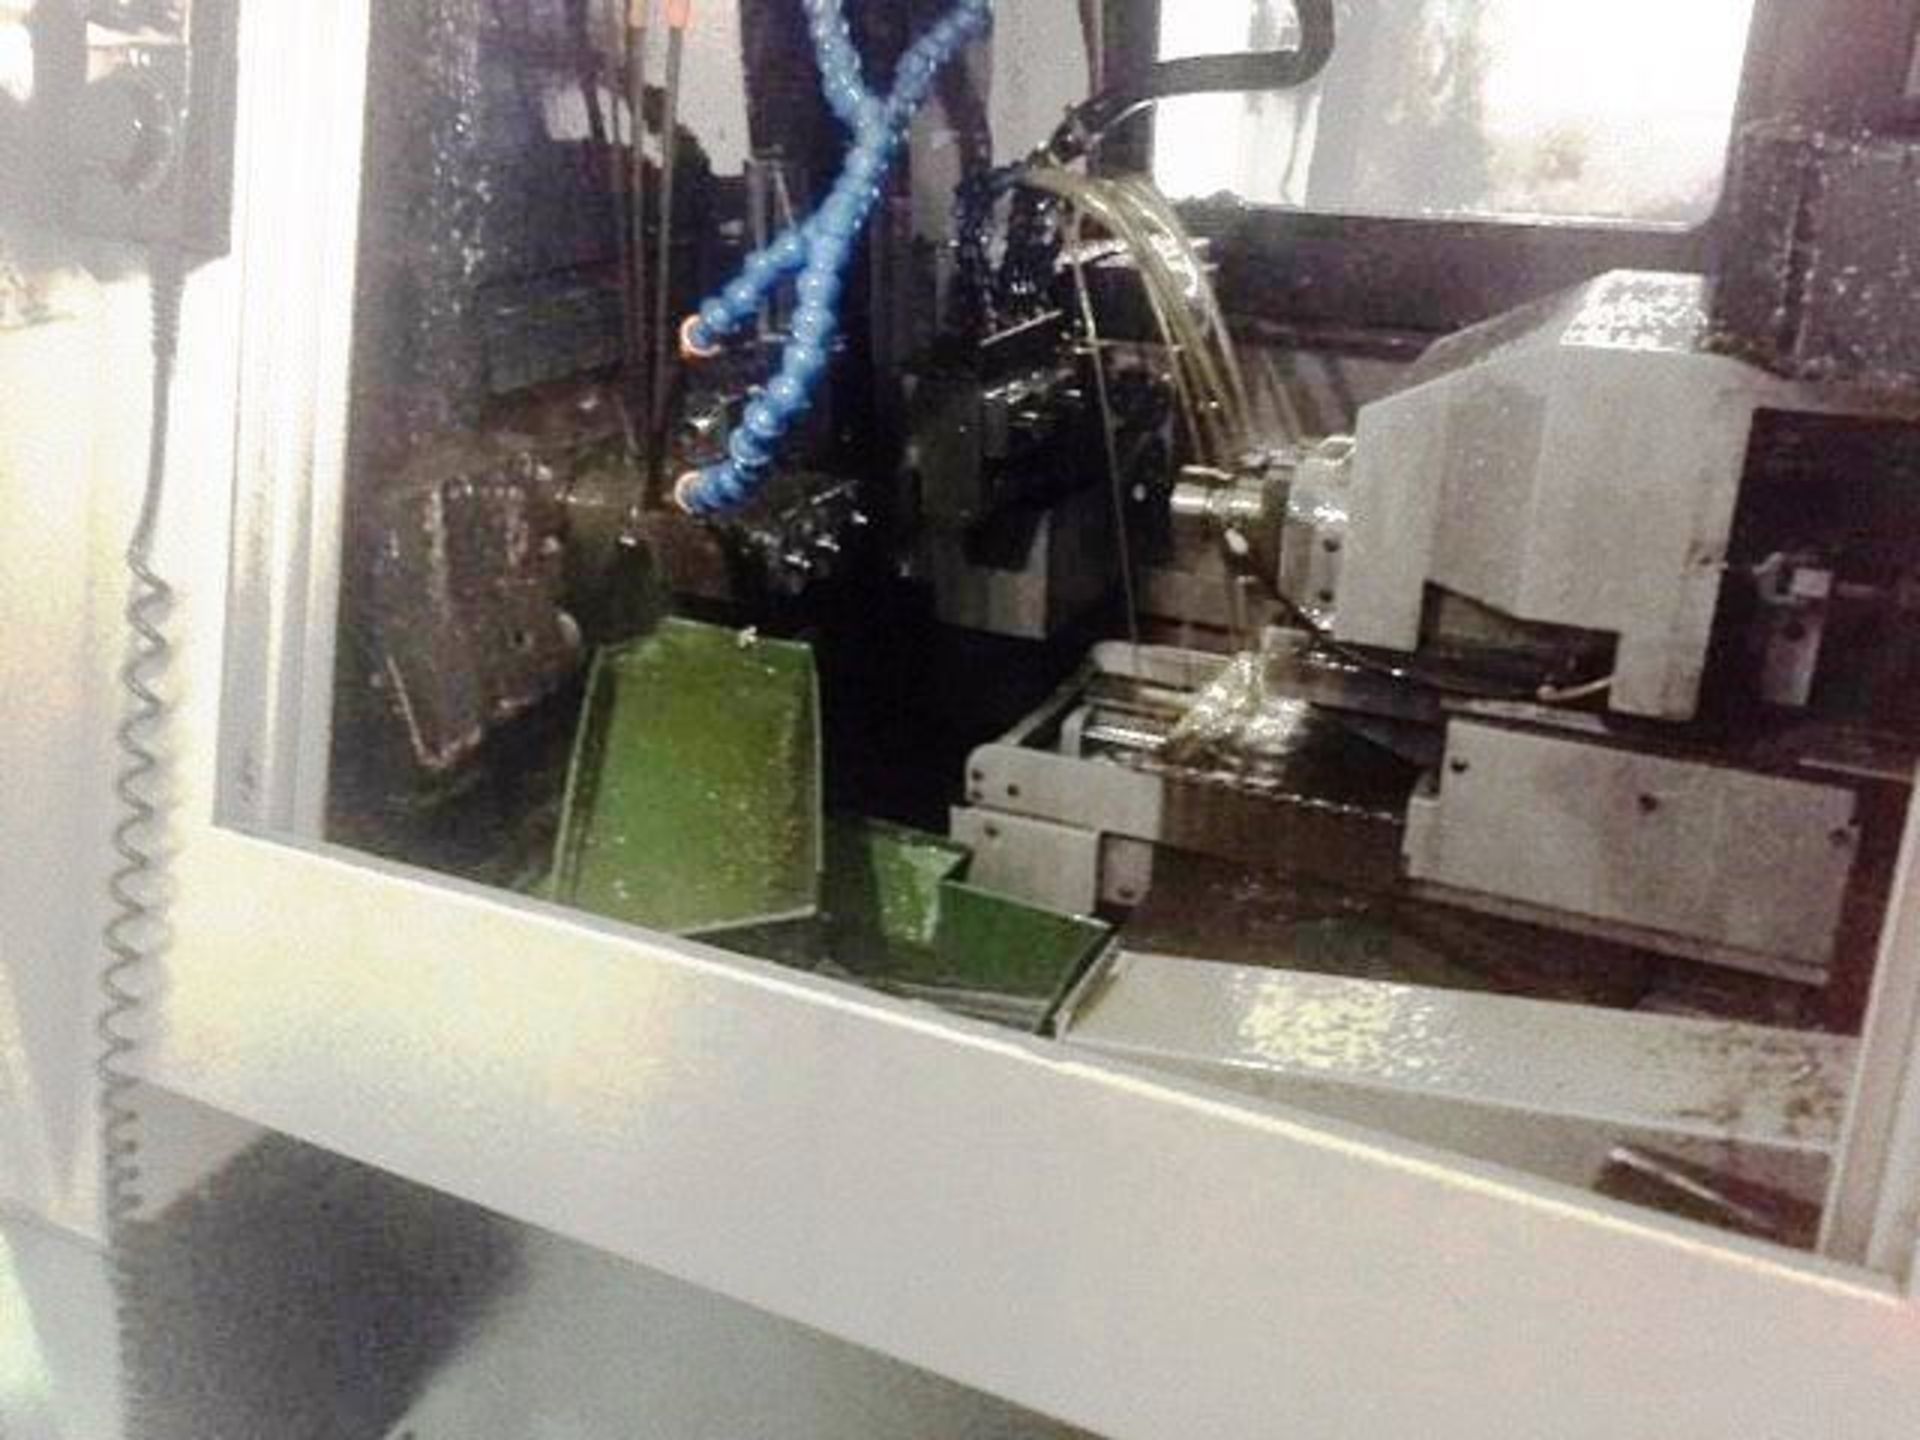 32MM TSUGAMI SS32 SUPER SWISSTURN SLIDING HEADSTOCK CNC AUTOMATIC LATHE, S/N 183, NEW 2010 Working - Image 7 of 15